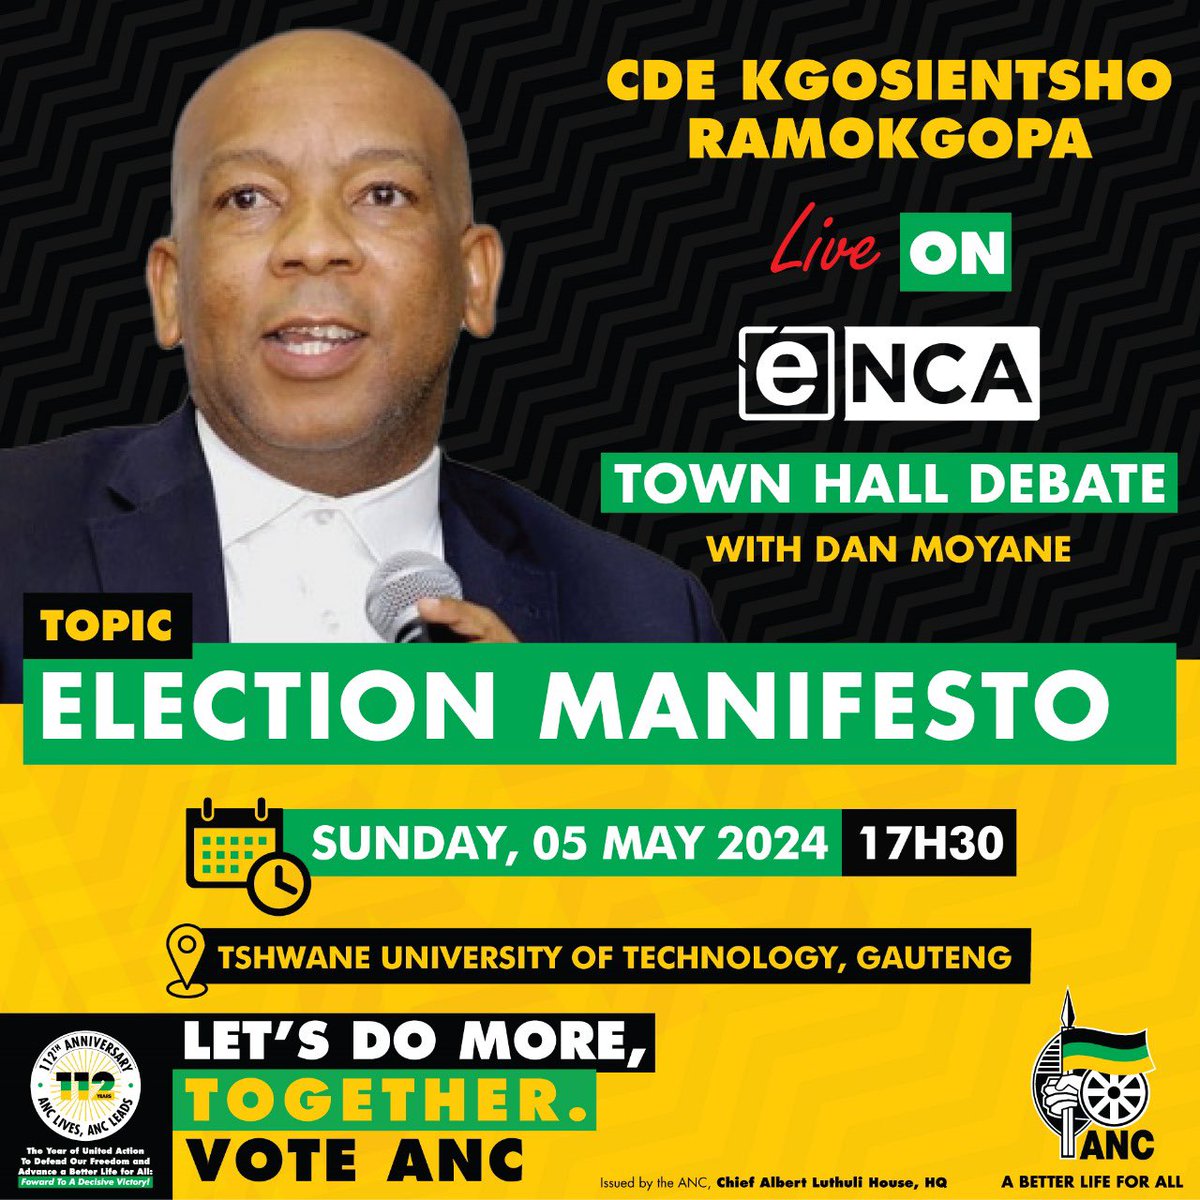 Catch ANC NEC Member, Cde Kgosientsho 'Sputla' Ramokgopa Live on the @eNCA Town Hall Debate with Dan Moyane as he puts forward the #ANCManifesto. #VoteANC2024 #LetsDoMoreTogether